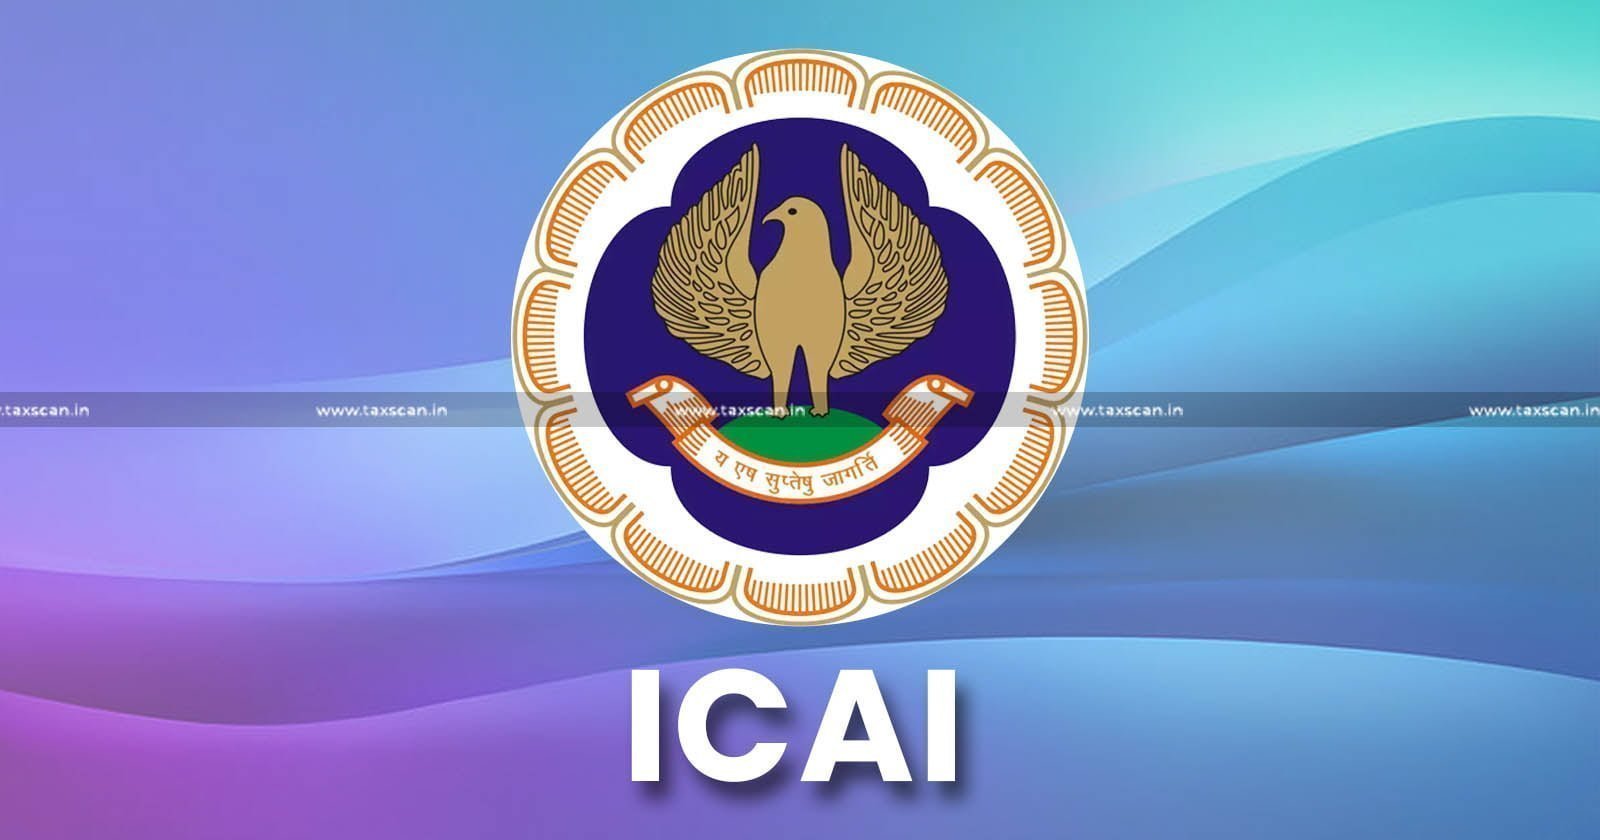 ICAI - Membership - ICAI Removes Membership of Two Chartered Accountants - Two Chartered Accountants - Chartered Accountants - Professional Misconduct - taxscan